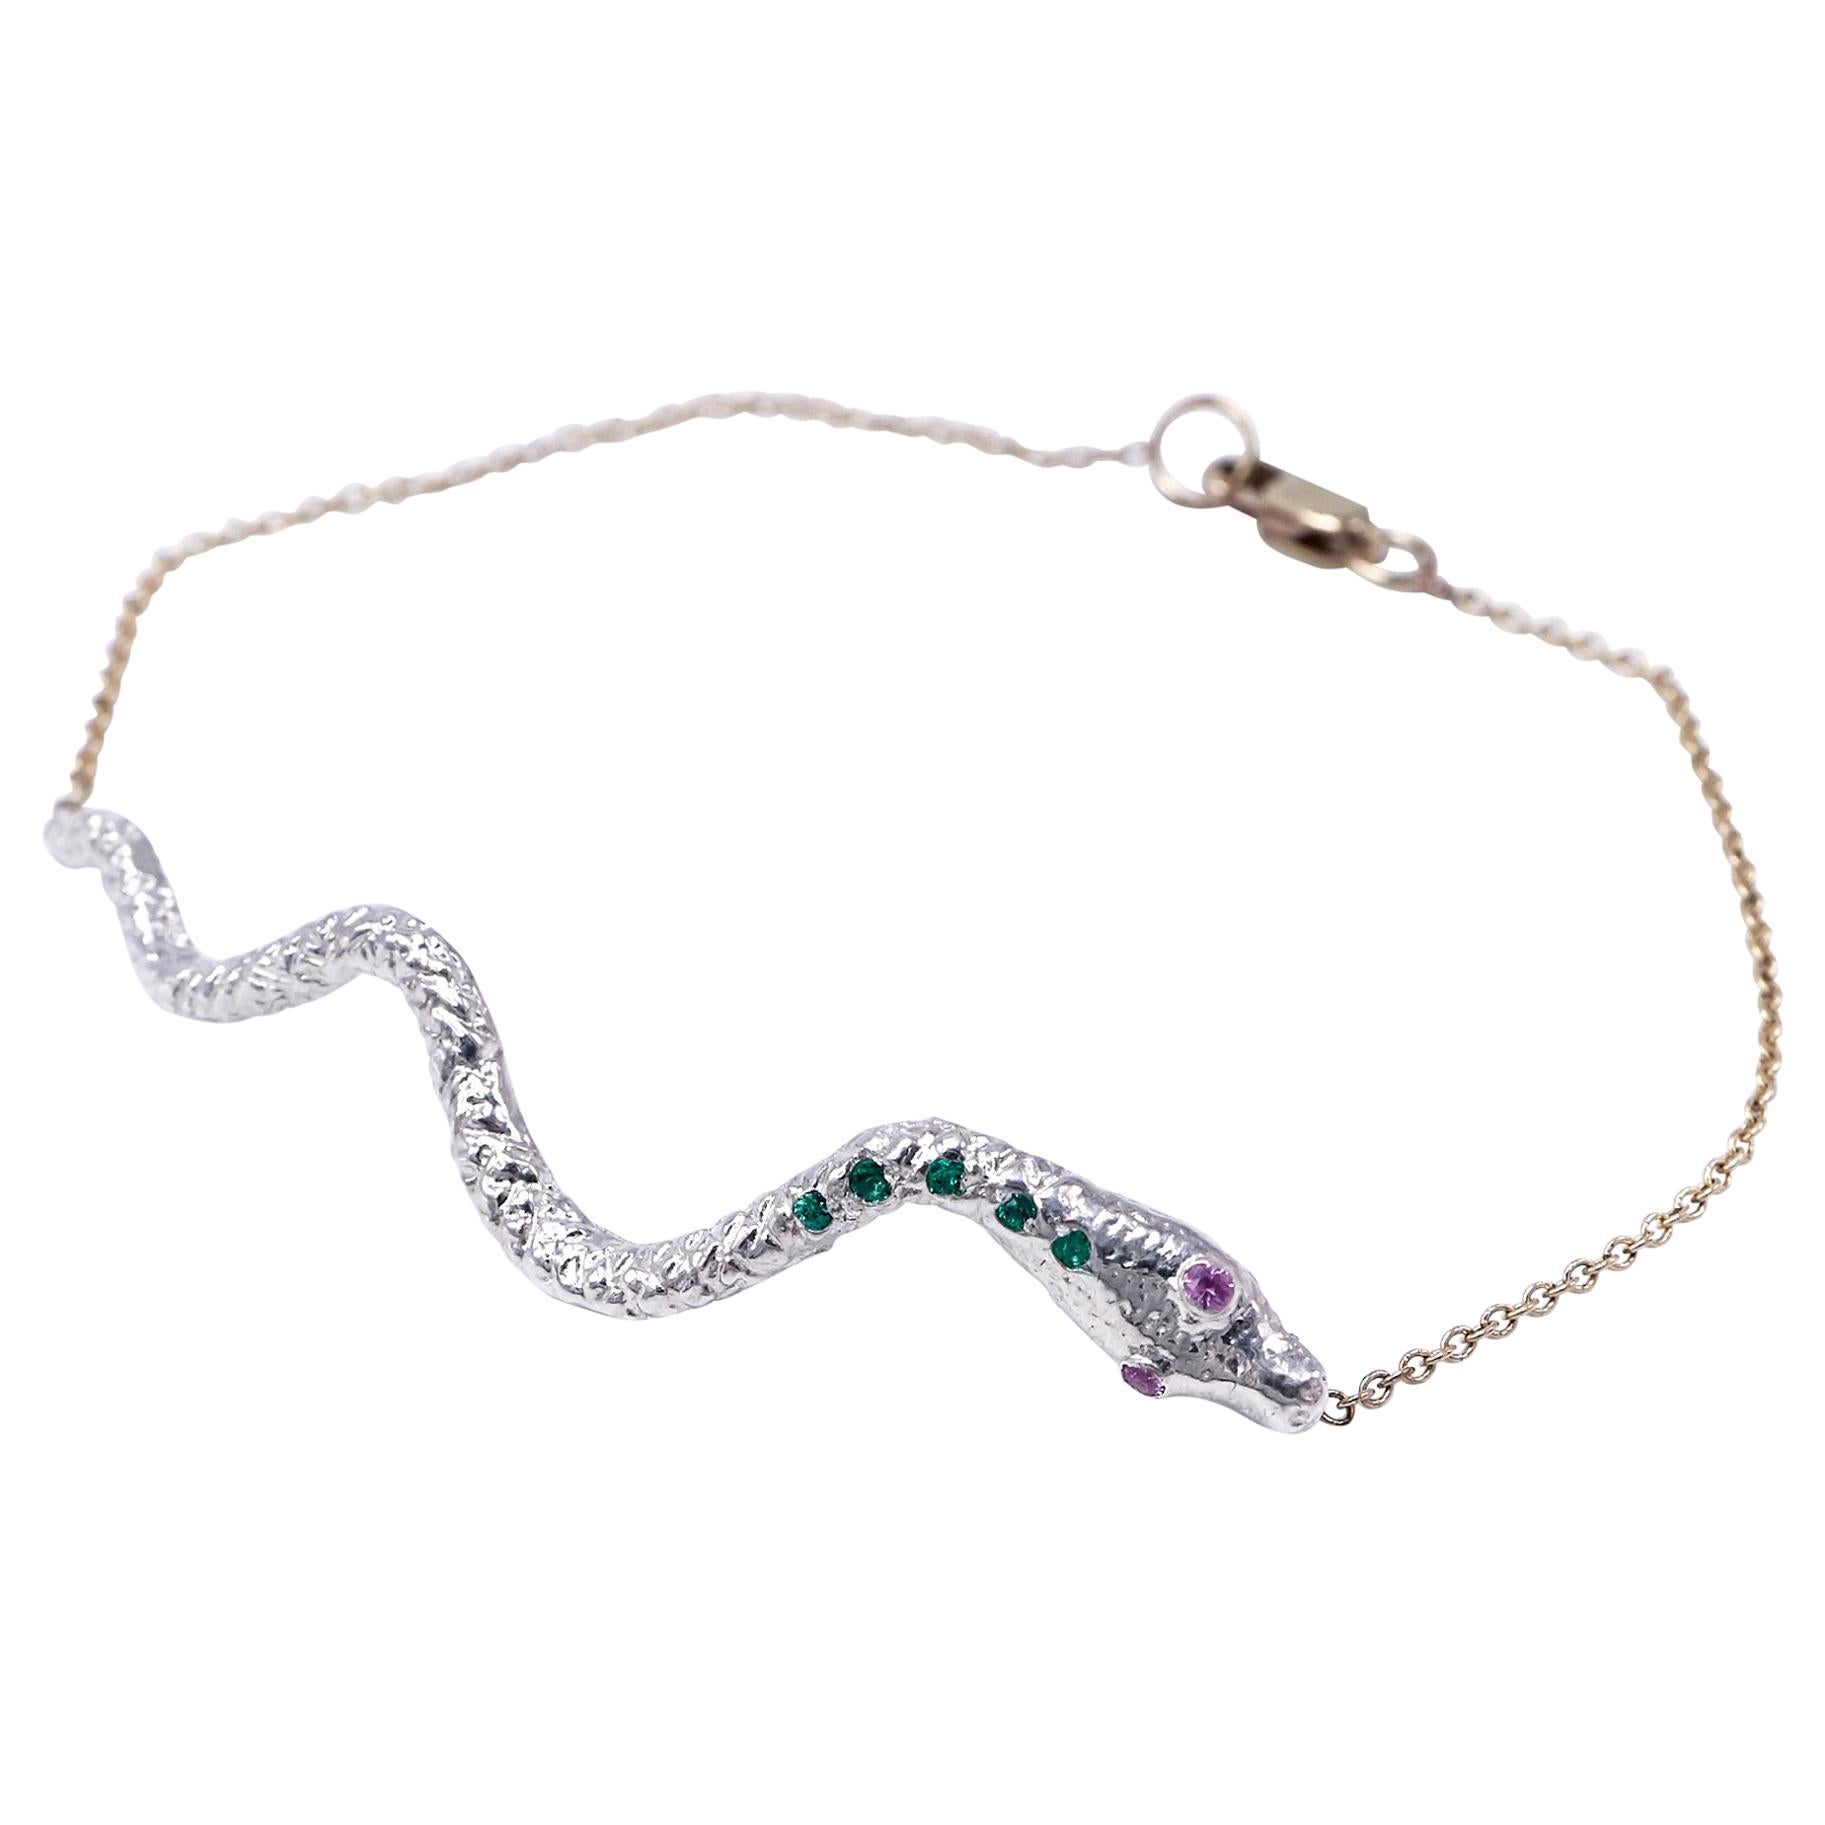 Emerald Pink Sapphire Snake Bracelet Sterling Silver Gold Filled Chain J Dauphin

J DAUPHIN Bracelet 